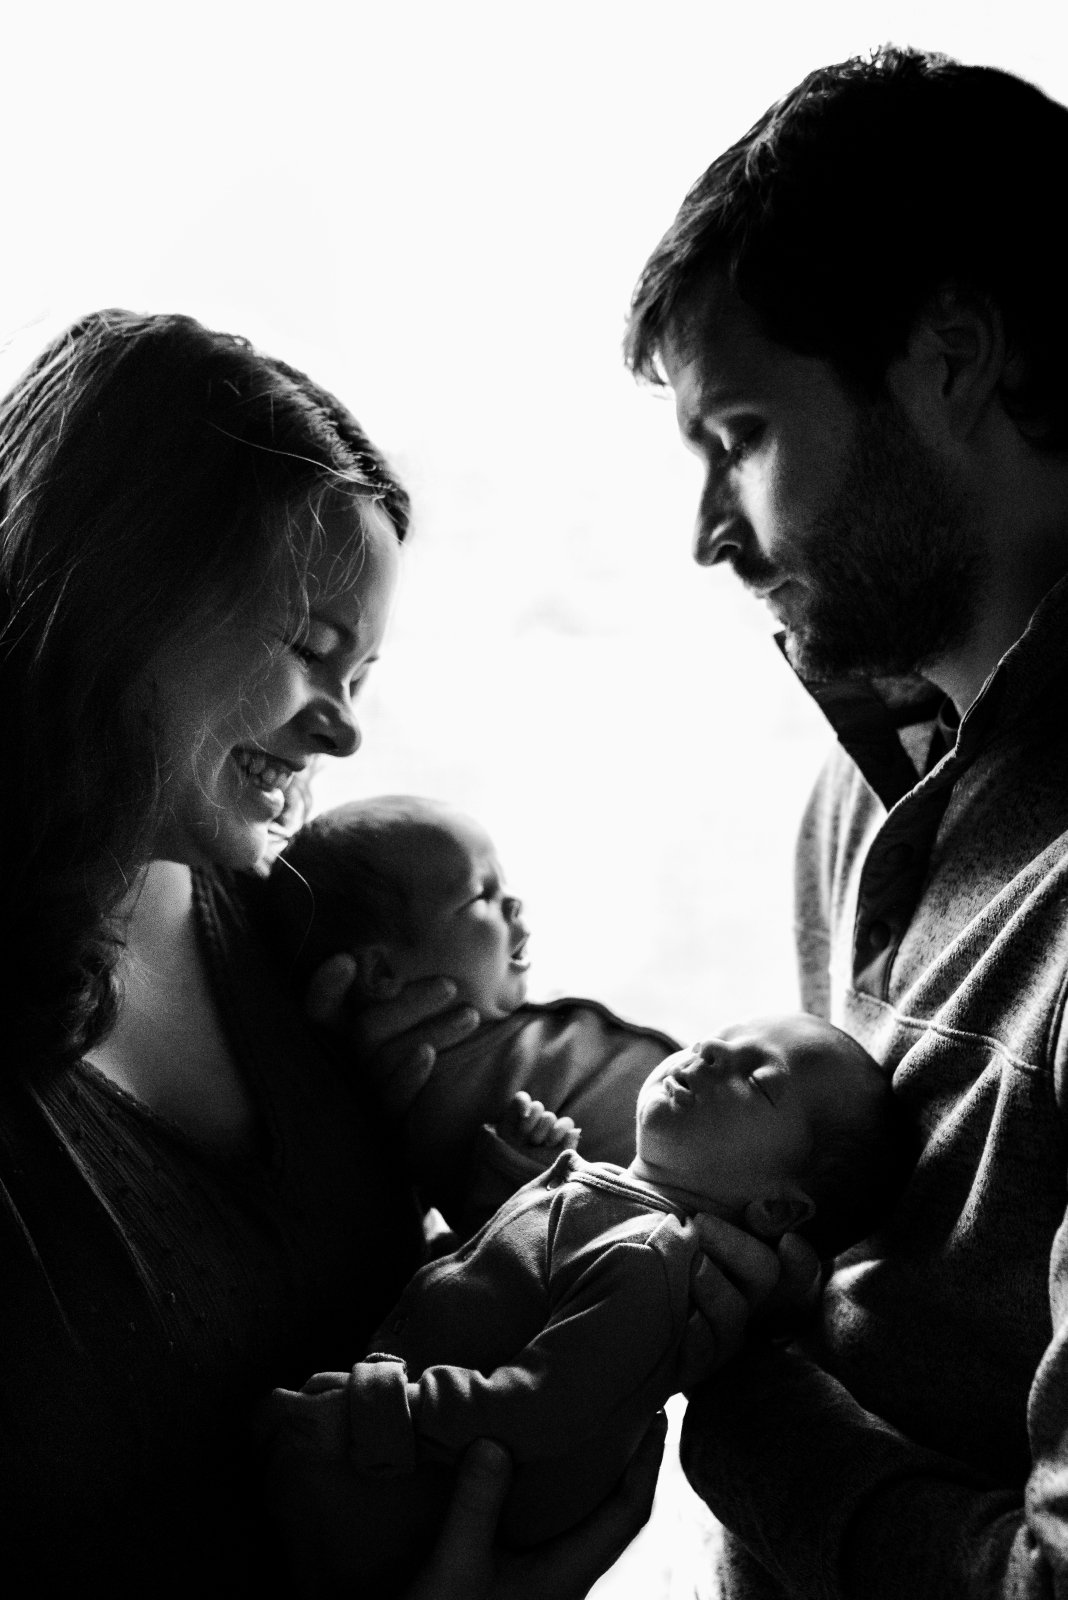 newborn, Wisconsin newborn Photographer, Wausau, Green Bay, Milwaukee, Madison, Minocqua, Stevens Point, What to Wear Photos, unique newborn photos 